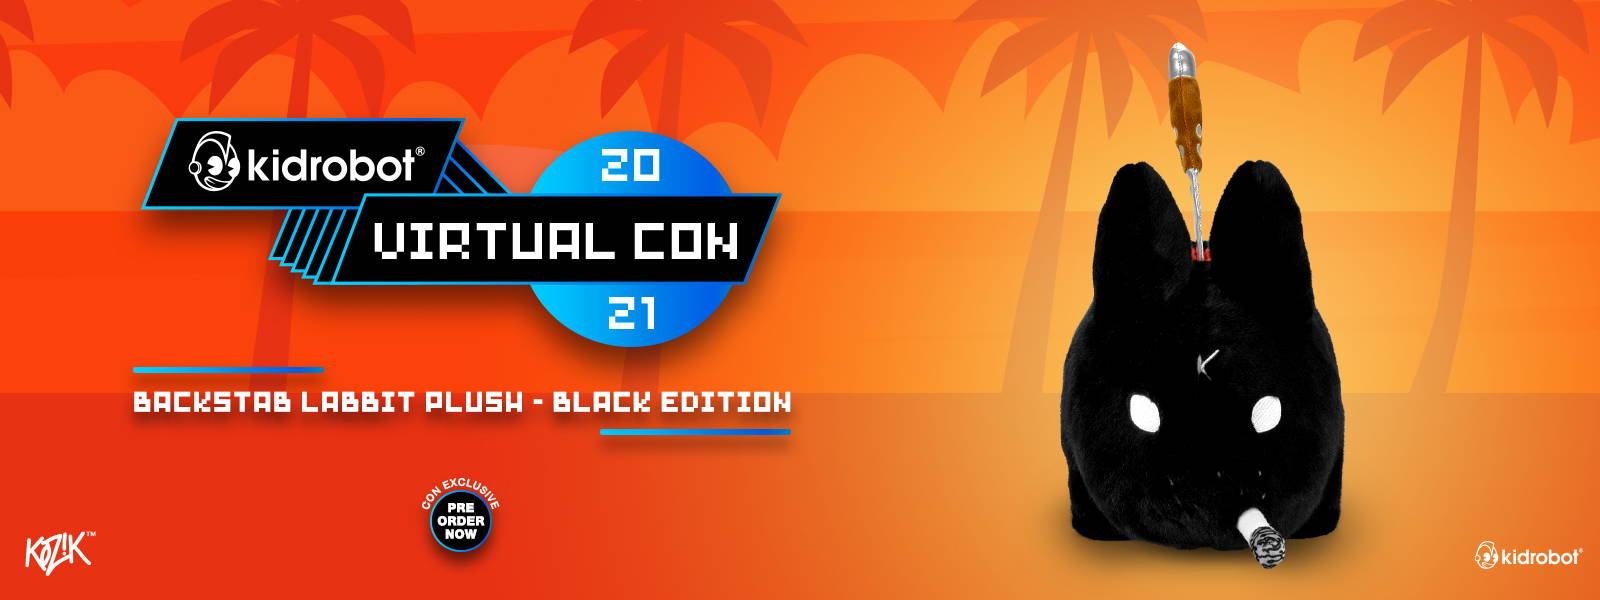 Kidrobot 2021 Virtual Con Exclusives - Shop limited edition con exclusives now at Kidrobot.com - Limited Edition Exclusive Backstab Labbit Plush by Frank Kozik - Black Edition